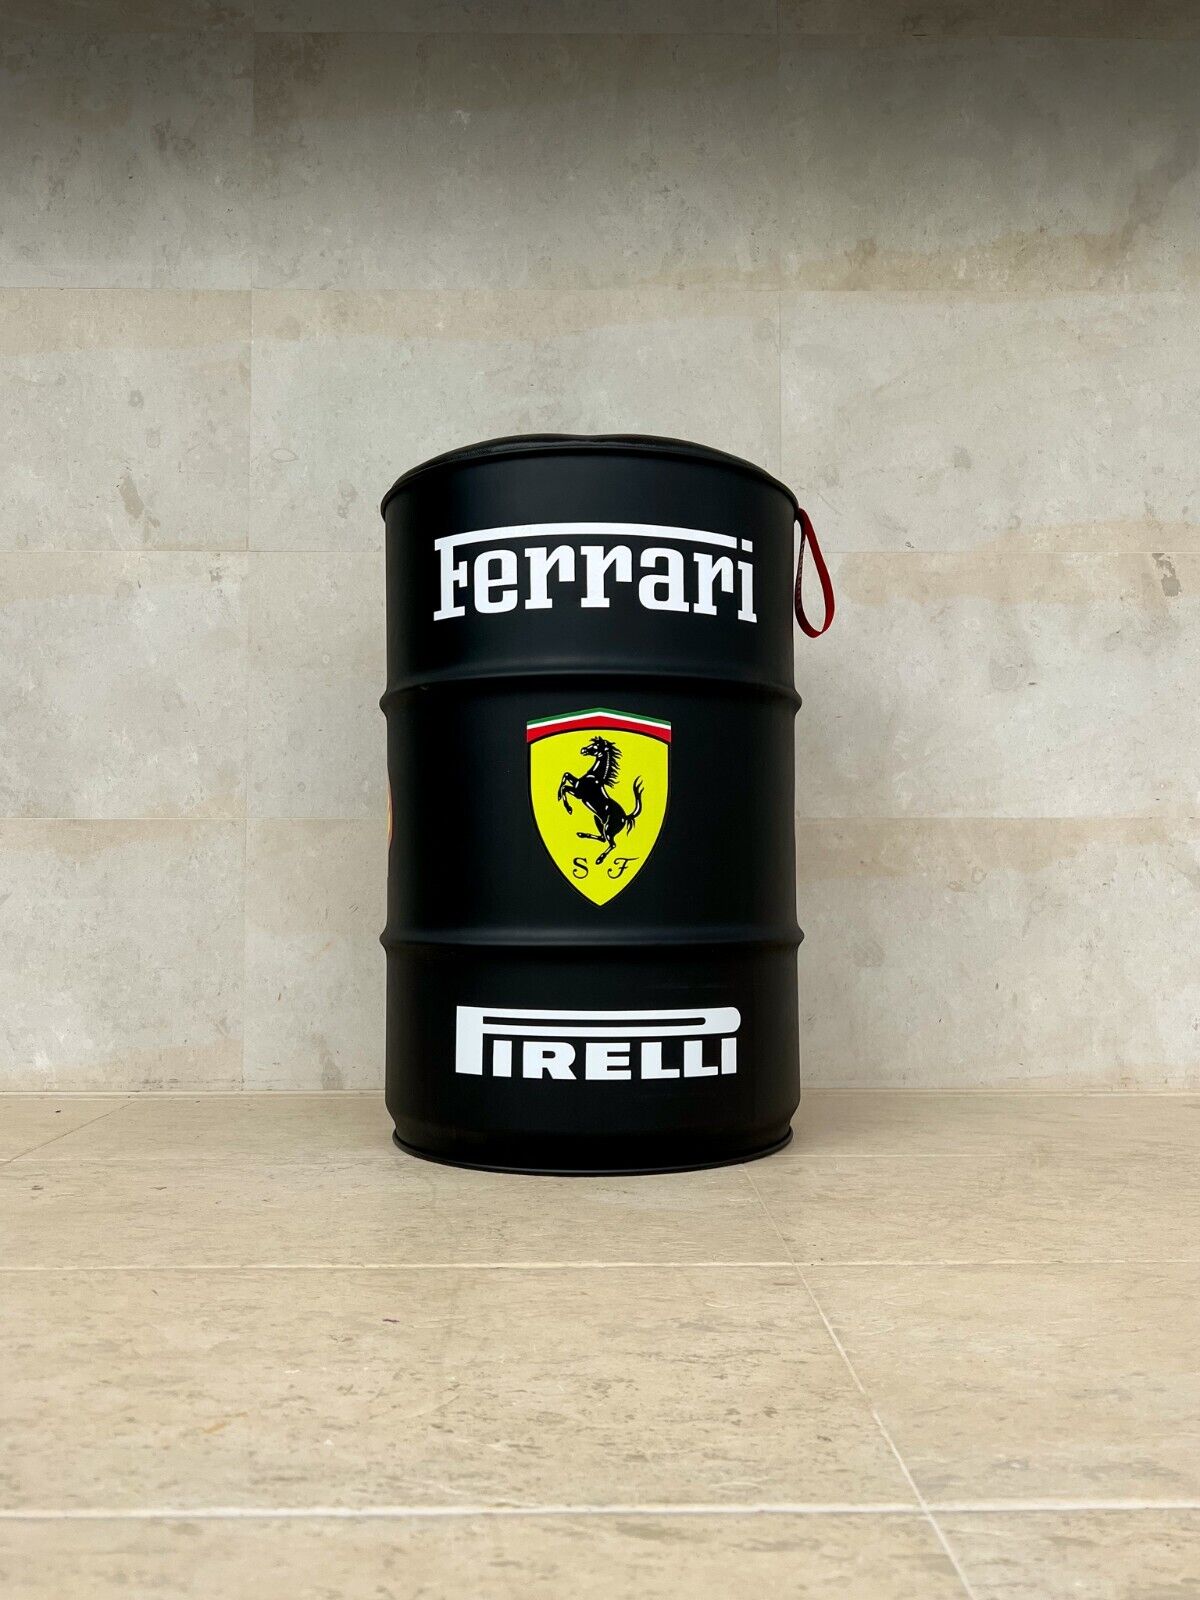 Ferrari barrel chair Pirelli inspired - hand made by PK Werks design studio